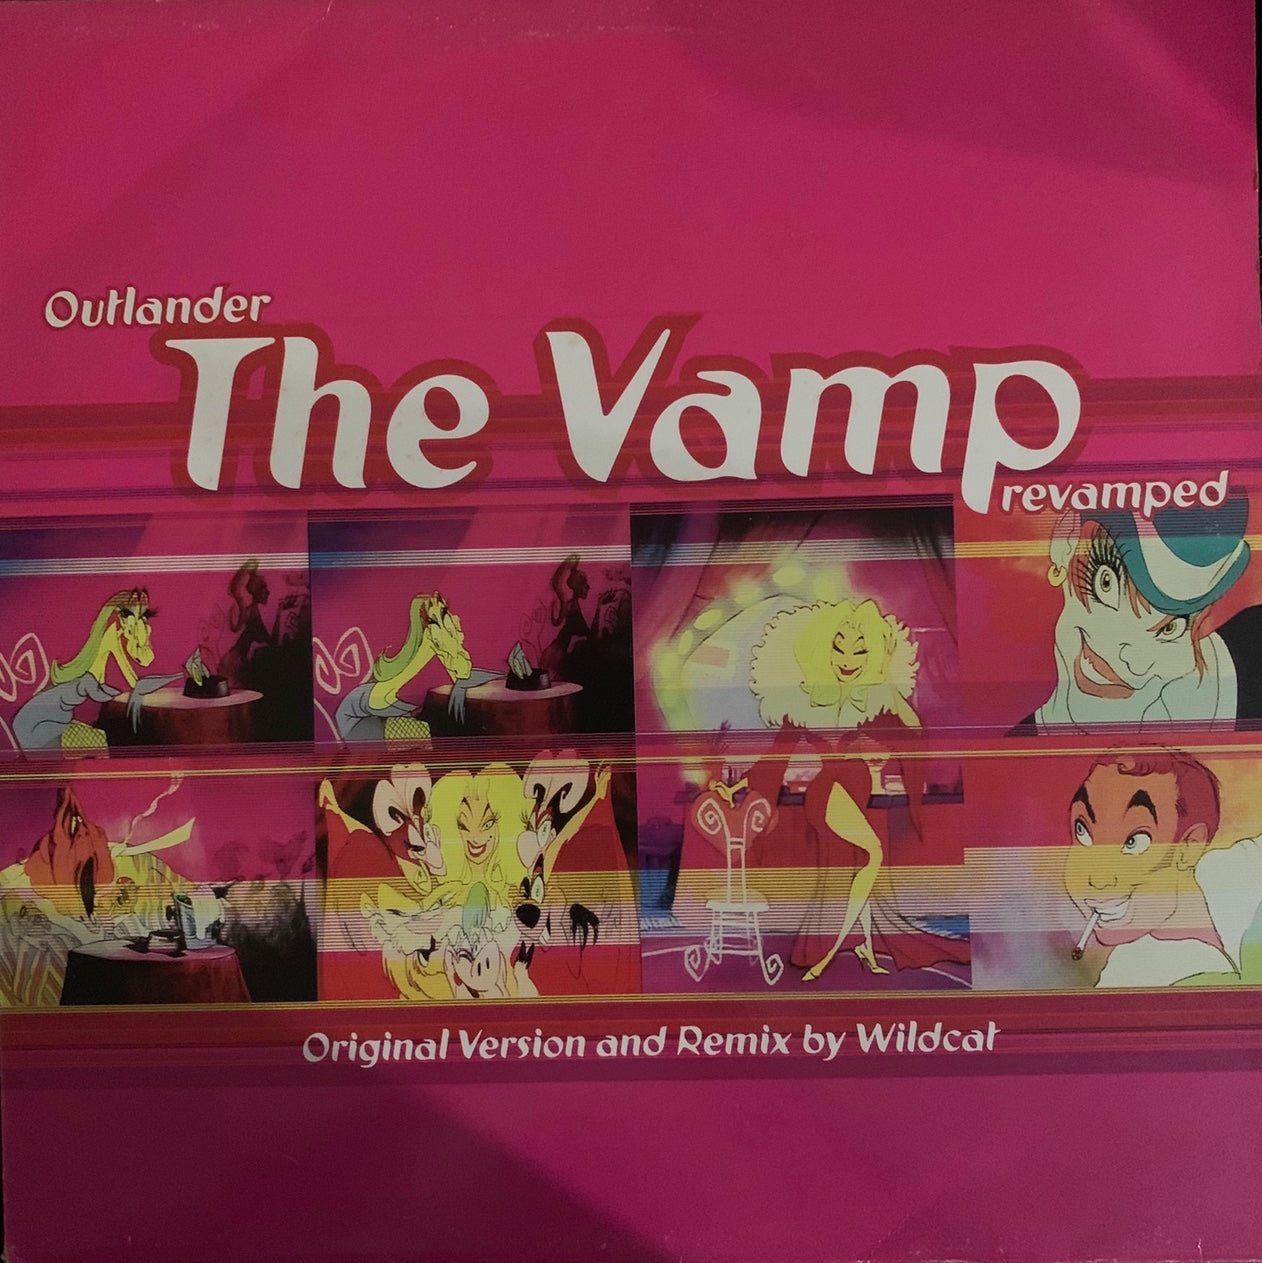 Outlander “The Vamp” Revamped Original Version and Wildcat Remix 2 Track 12inch Vinyl